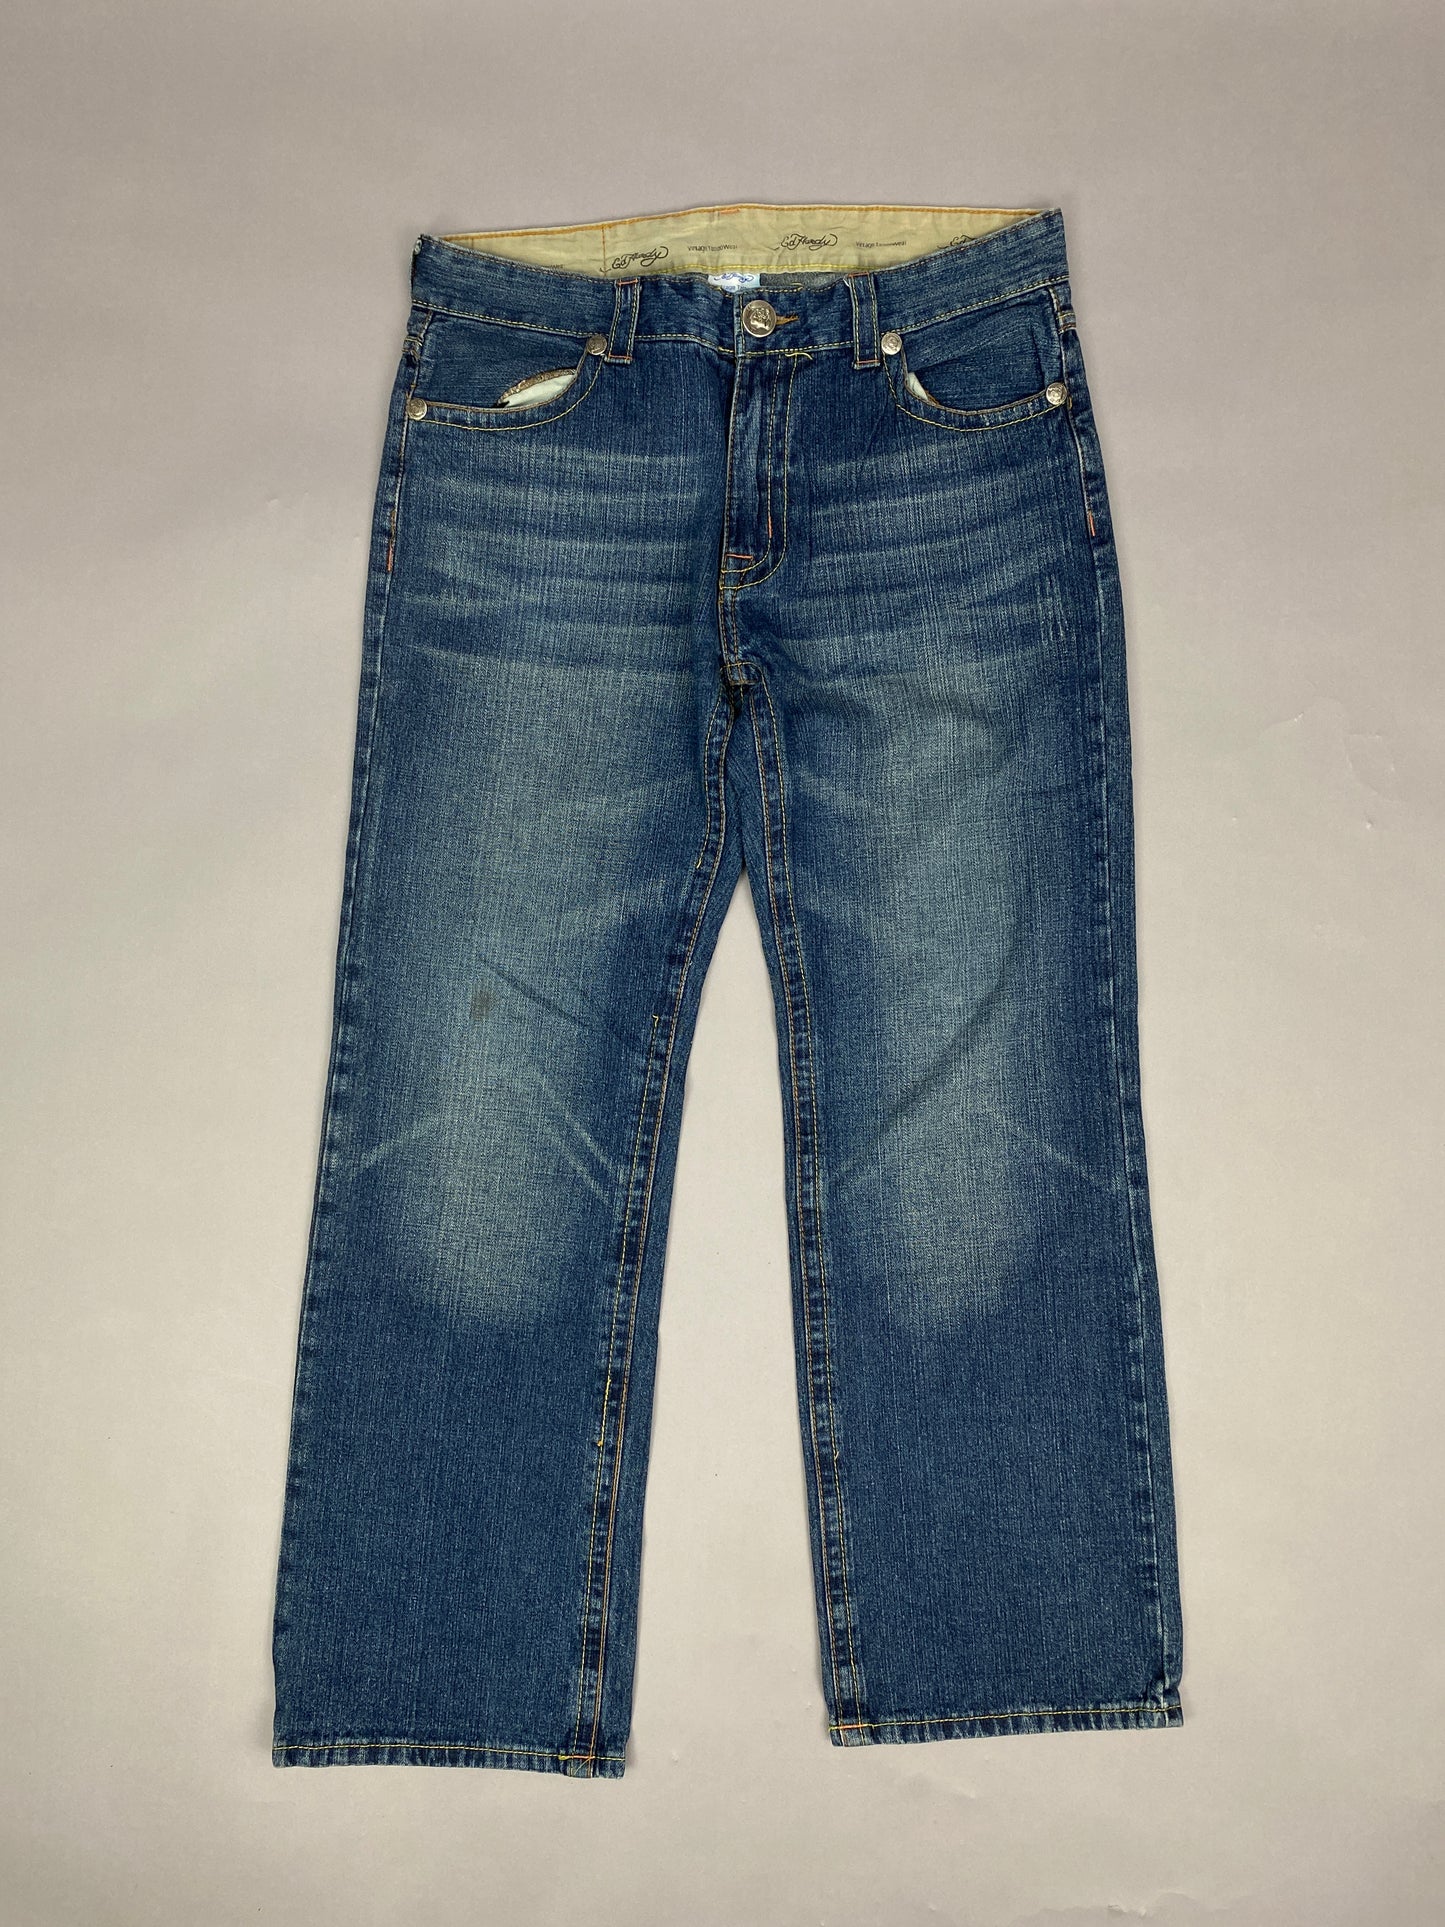 Jeans Ed Hardy Vintage - 36 x 33